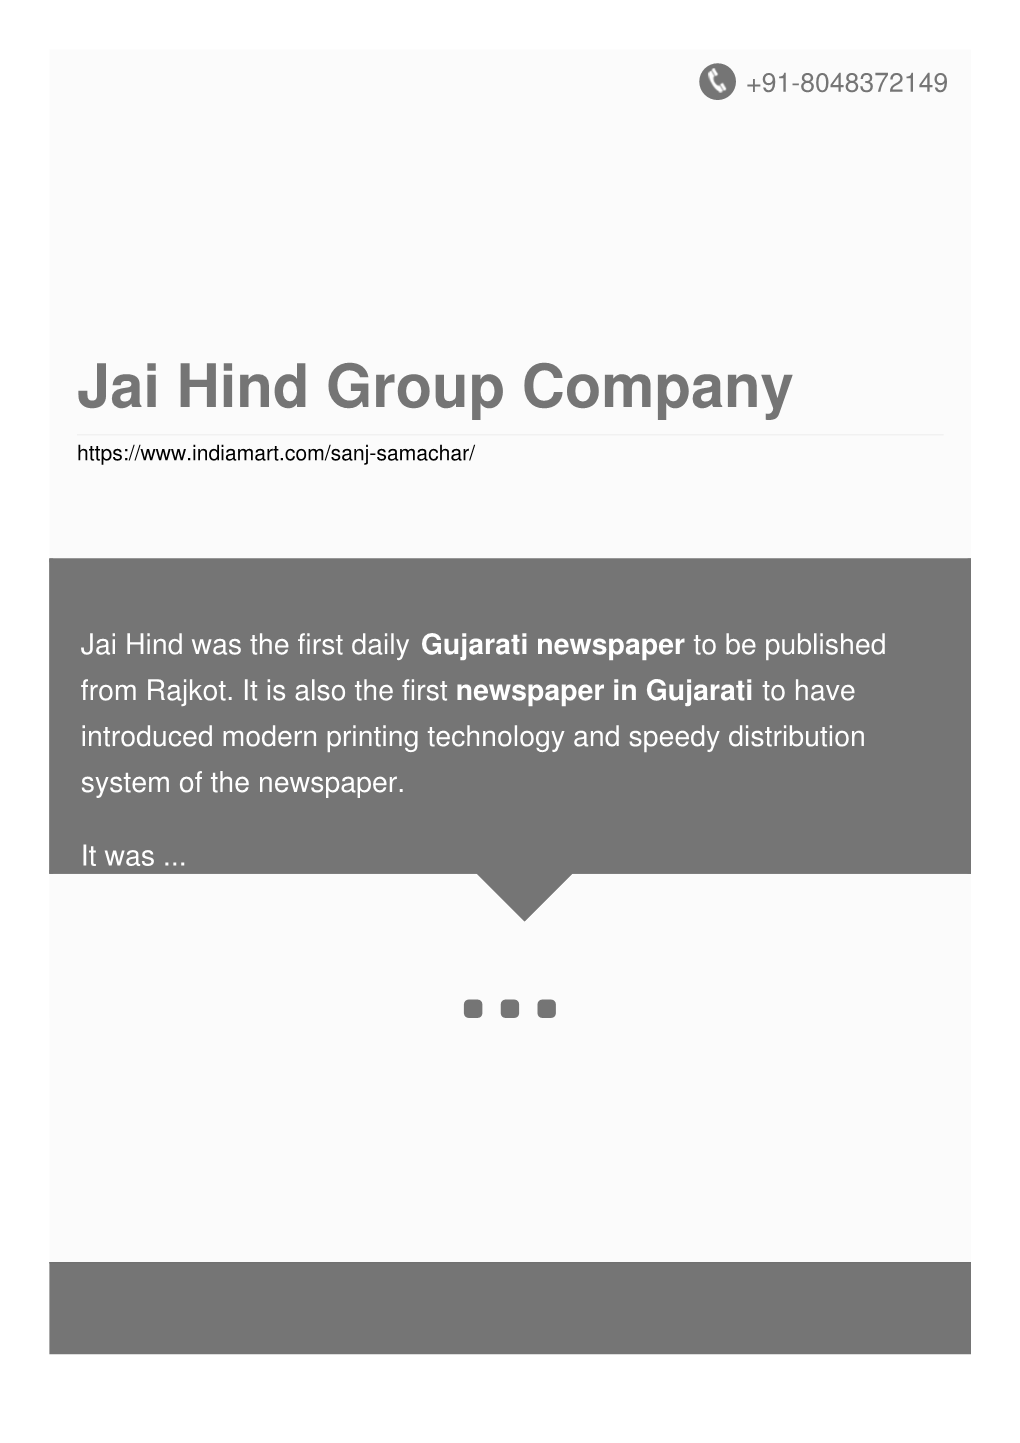 Jai Hind Group Company